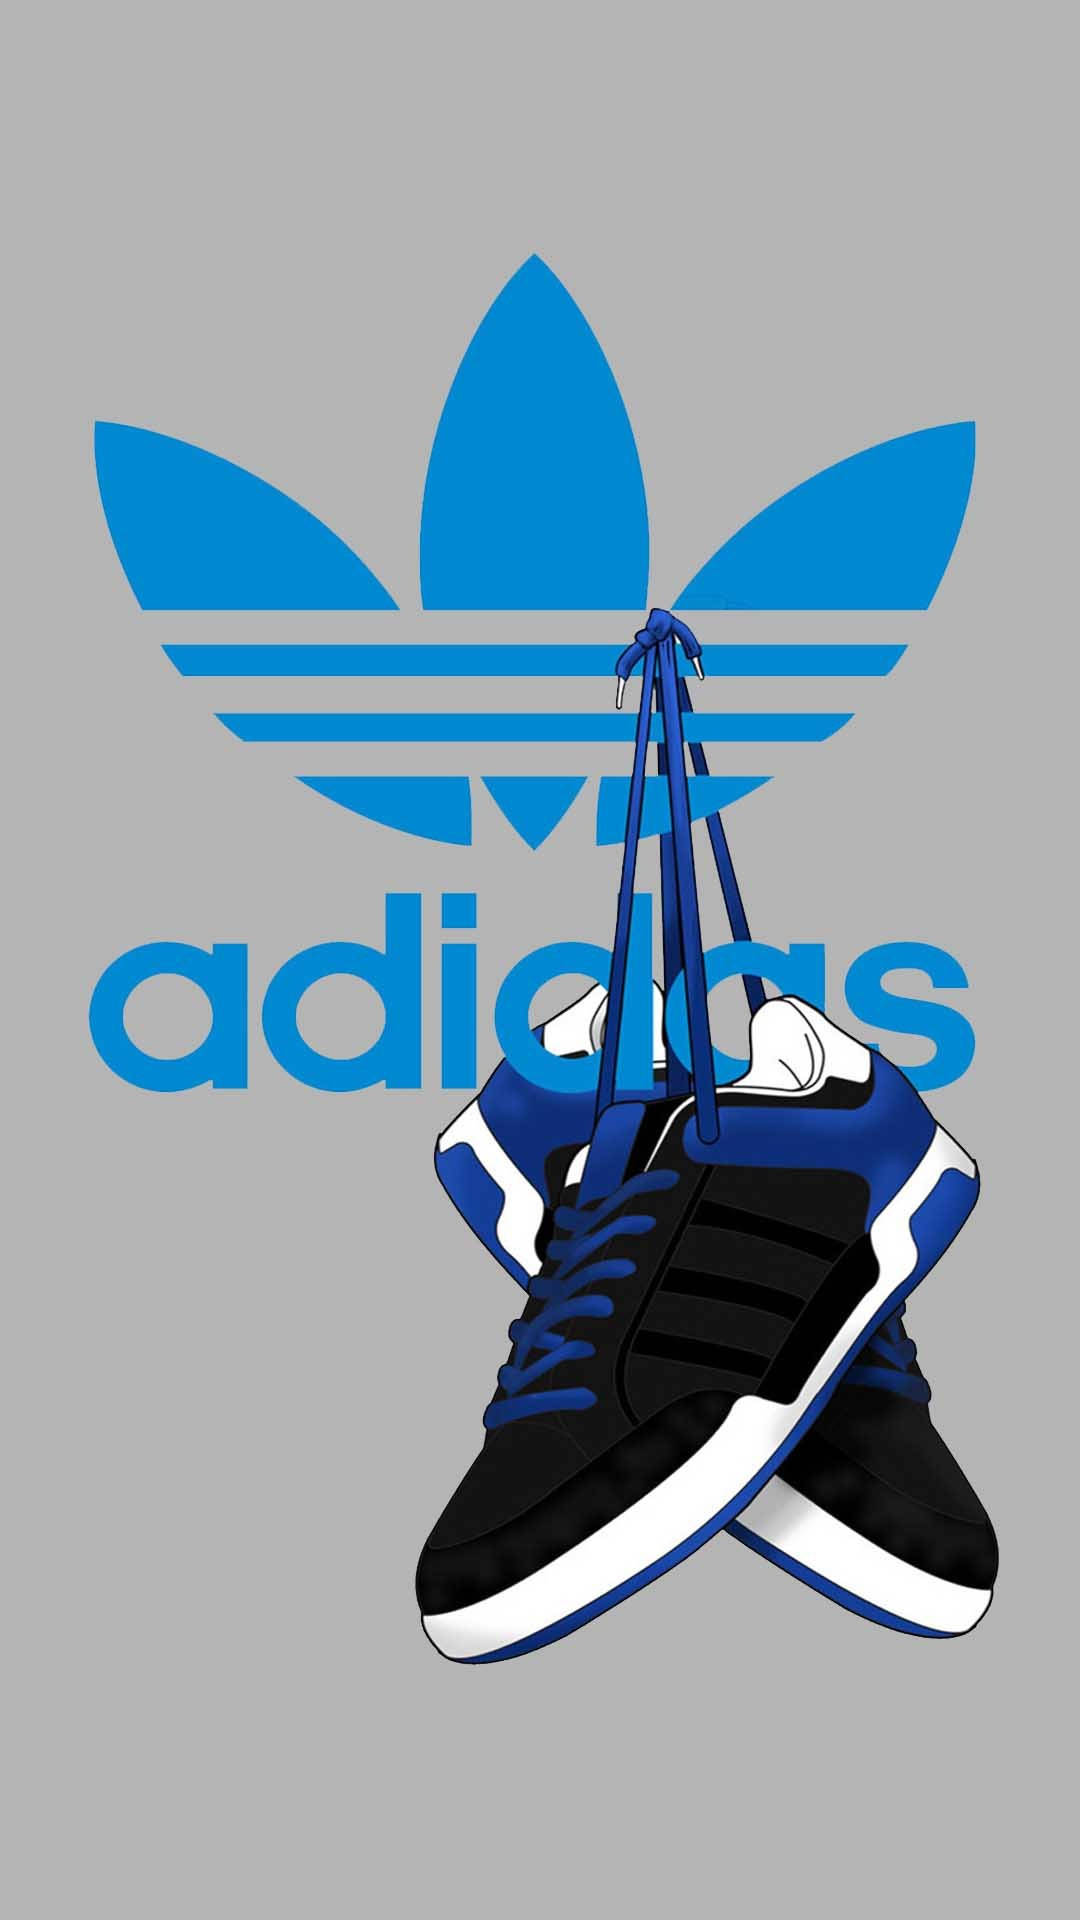 Download Adidas Shoes Samsung Galaxy S4 Wallpaper 